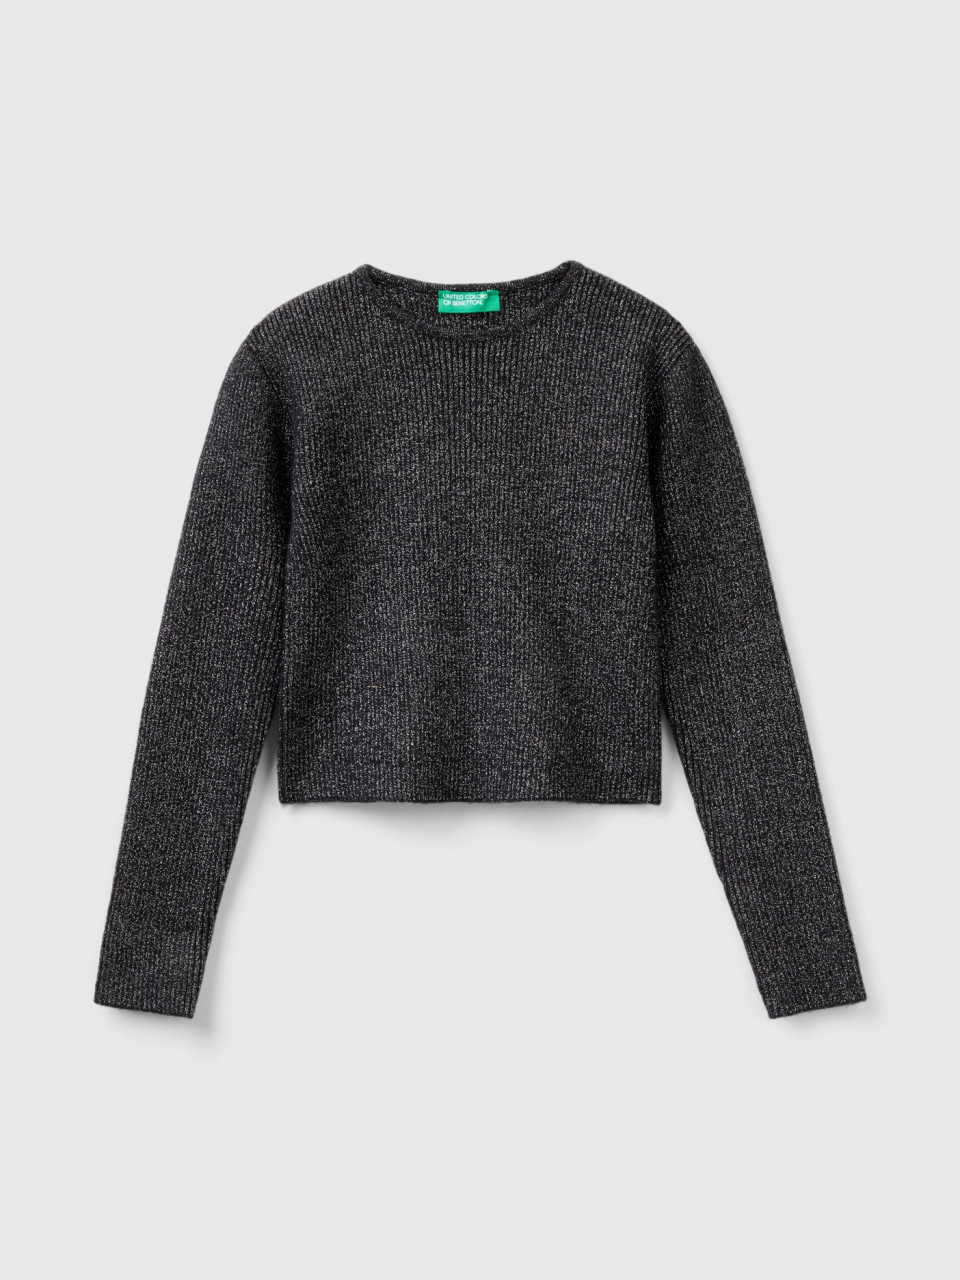 Benetton, Sweater With Lurex, Black, Kids